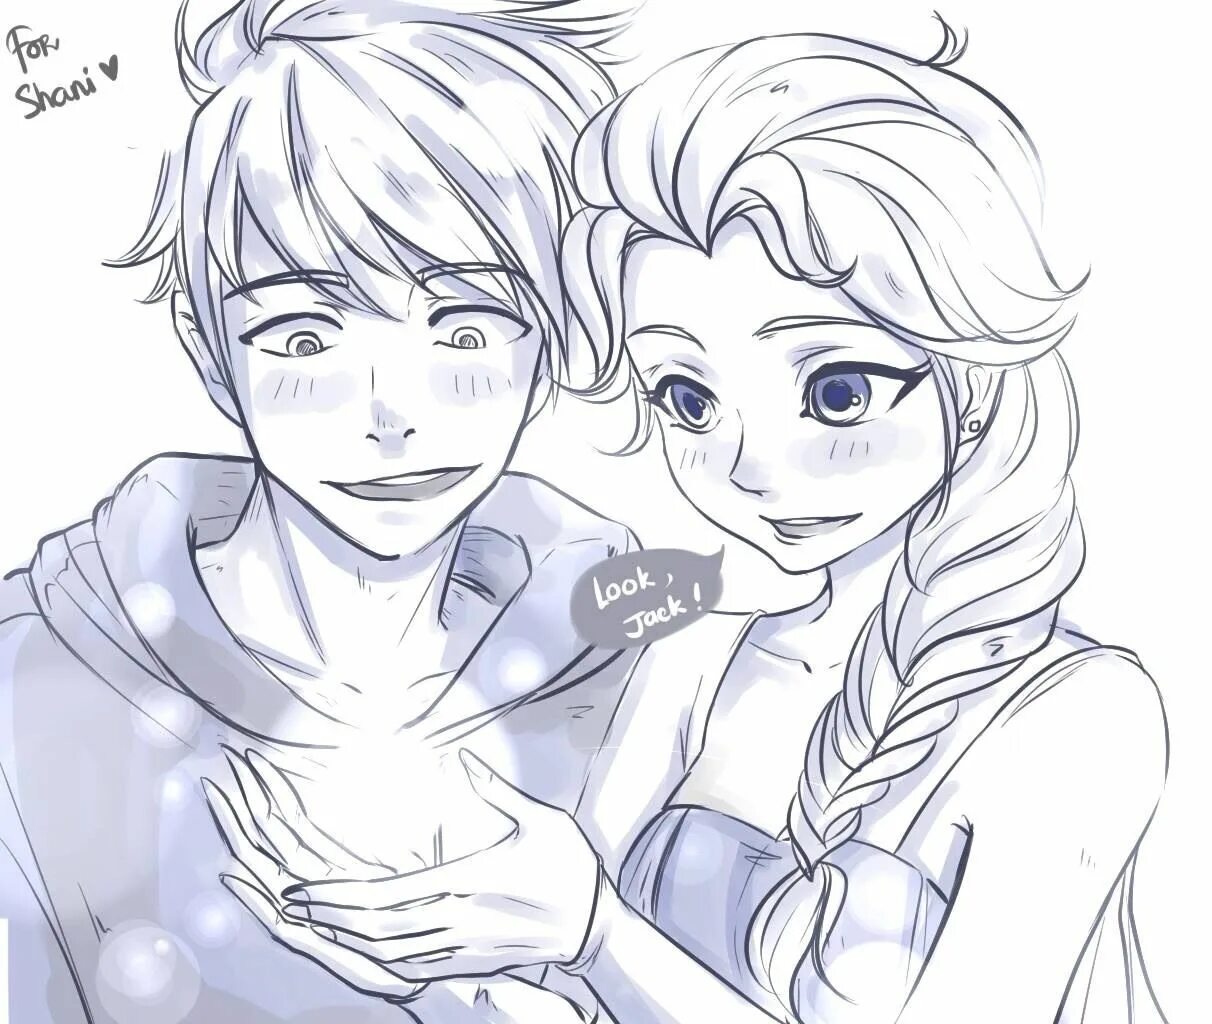 Elsa and icejack #5